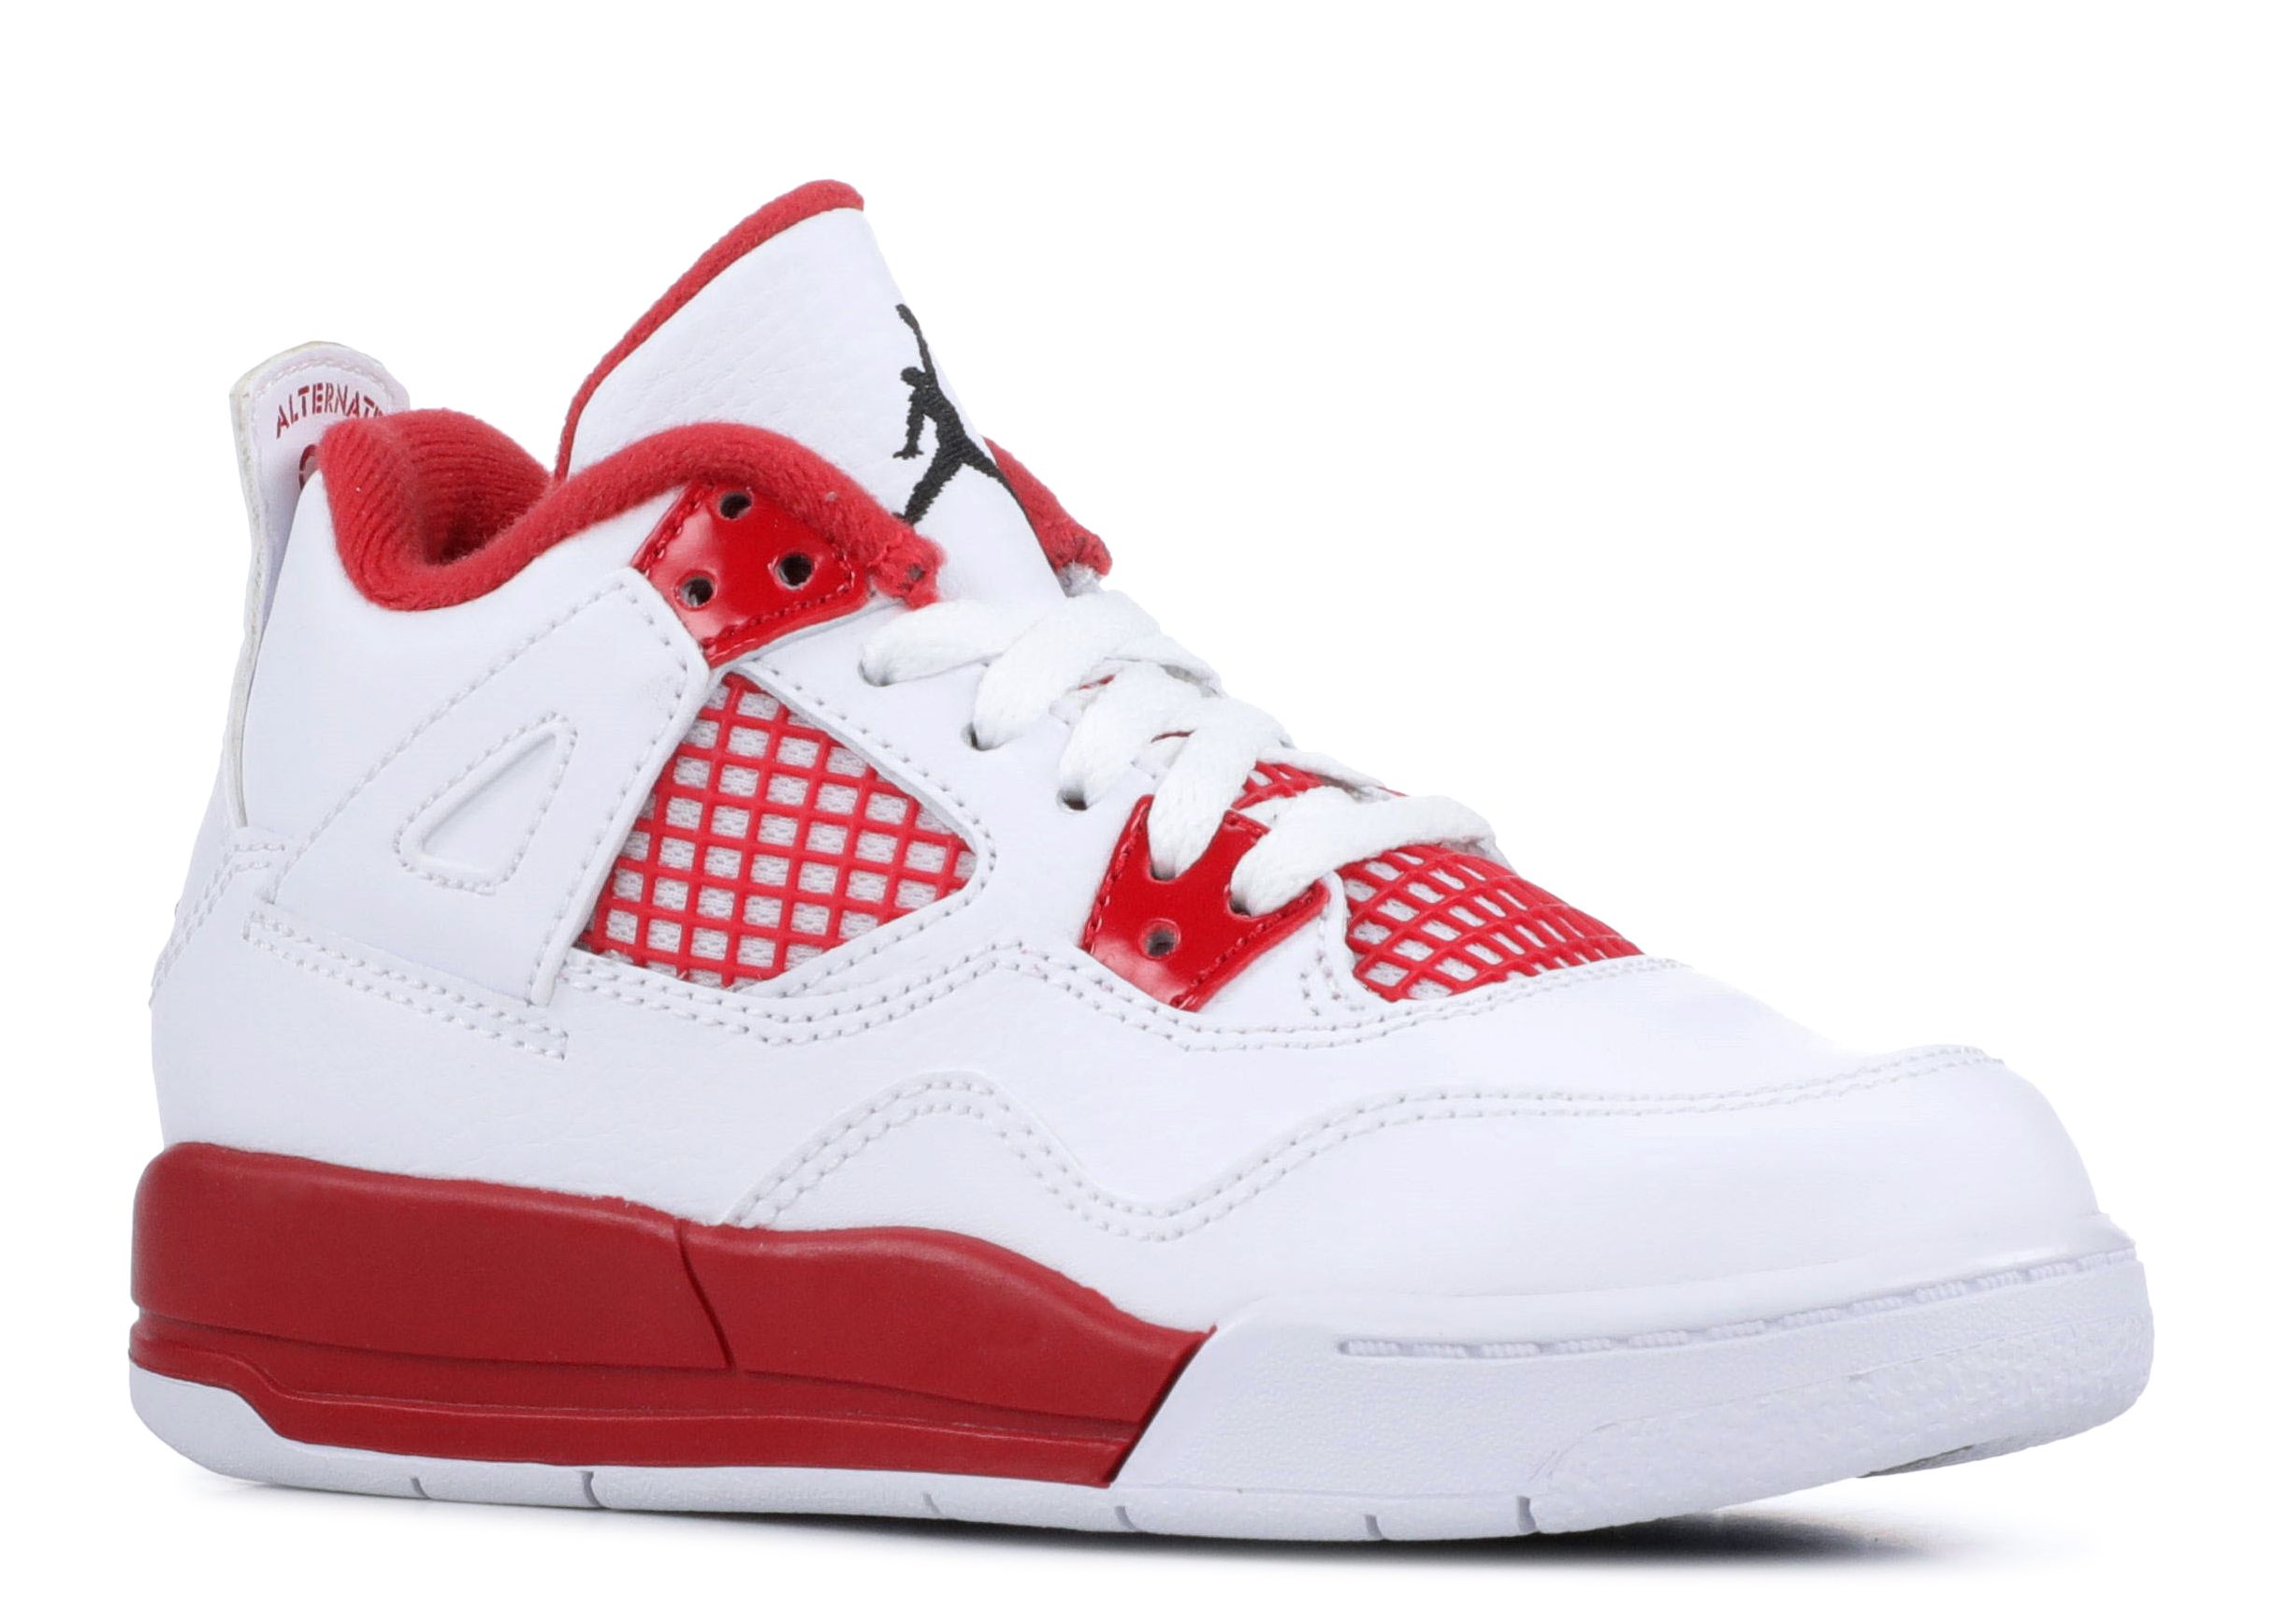 Buy Air Jordan 4 Retro - 308497 106, Gym Red/White/Black, 11.5 at